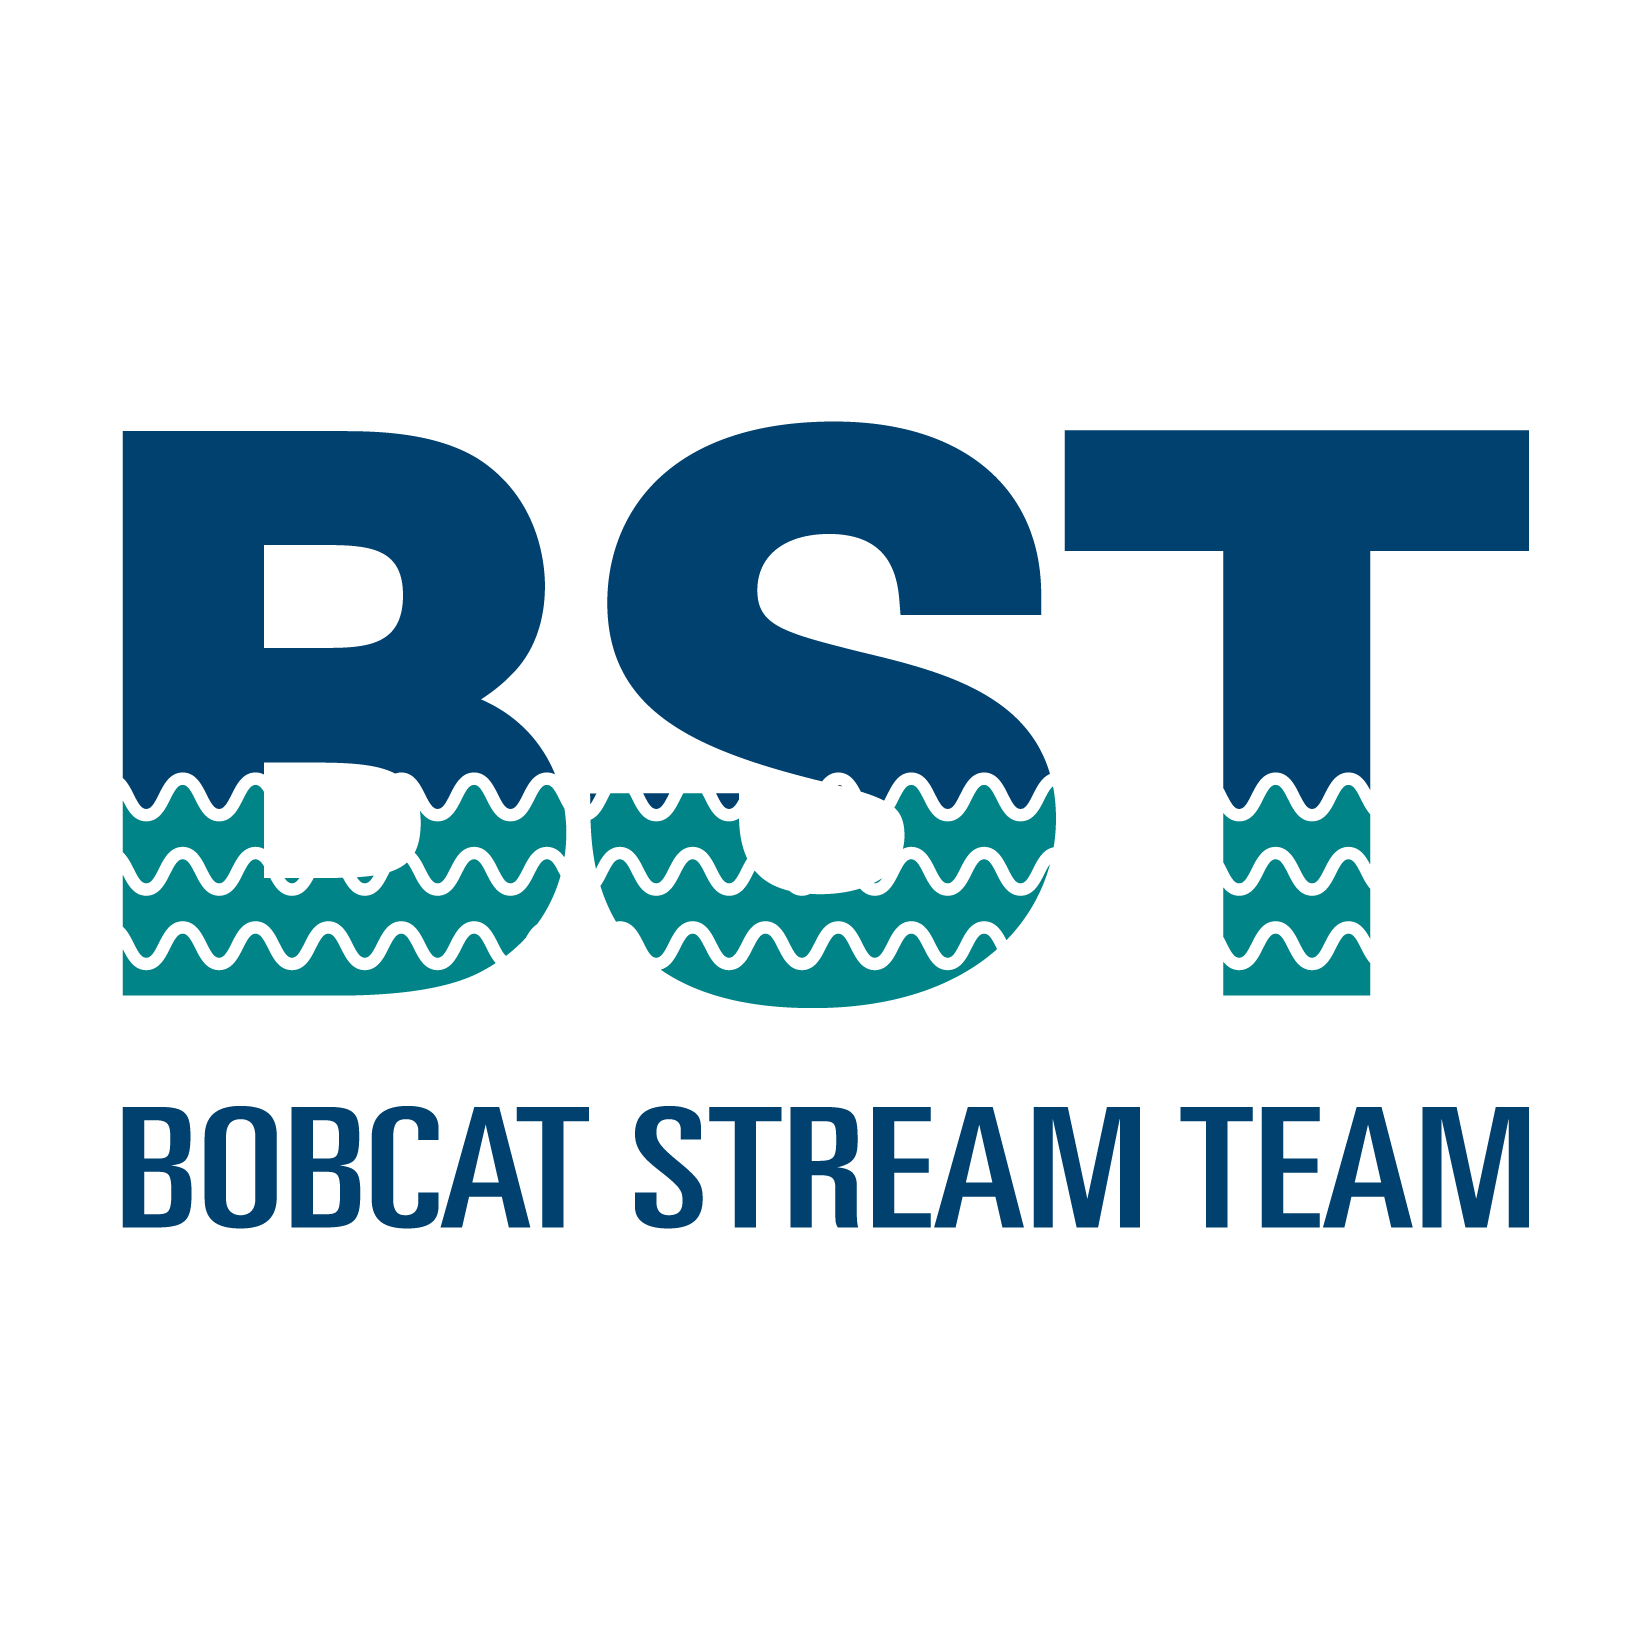 Bobcat Stream Team logo